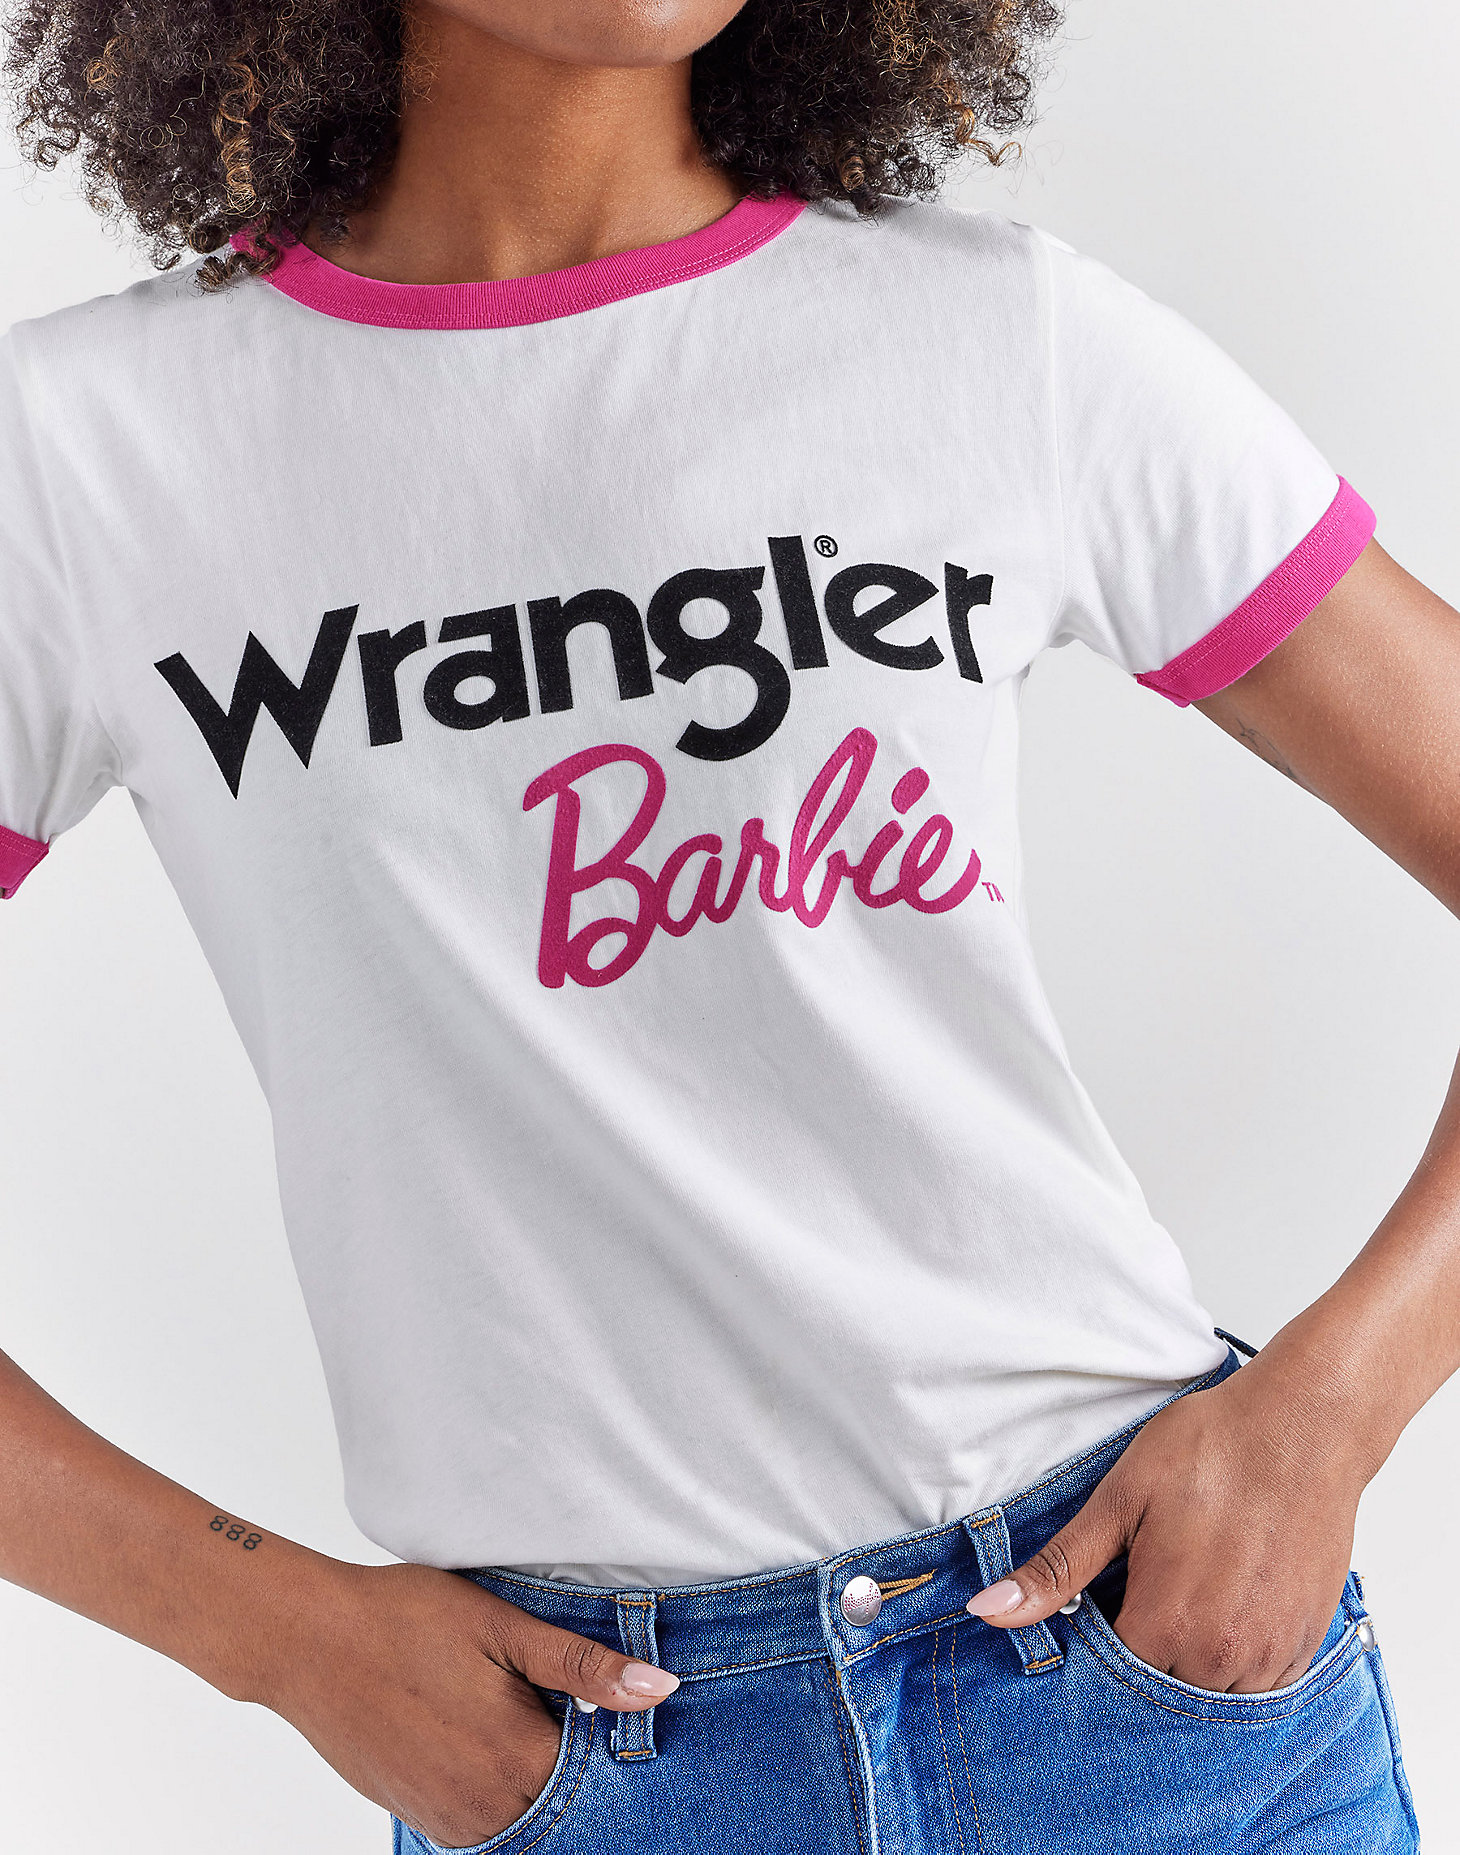 Wrangler x Barbie™ Logos Slim Ringer Tee in Worn White alternative view 3